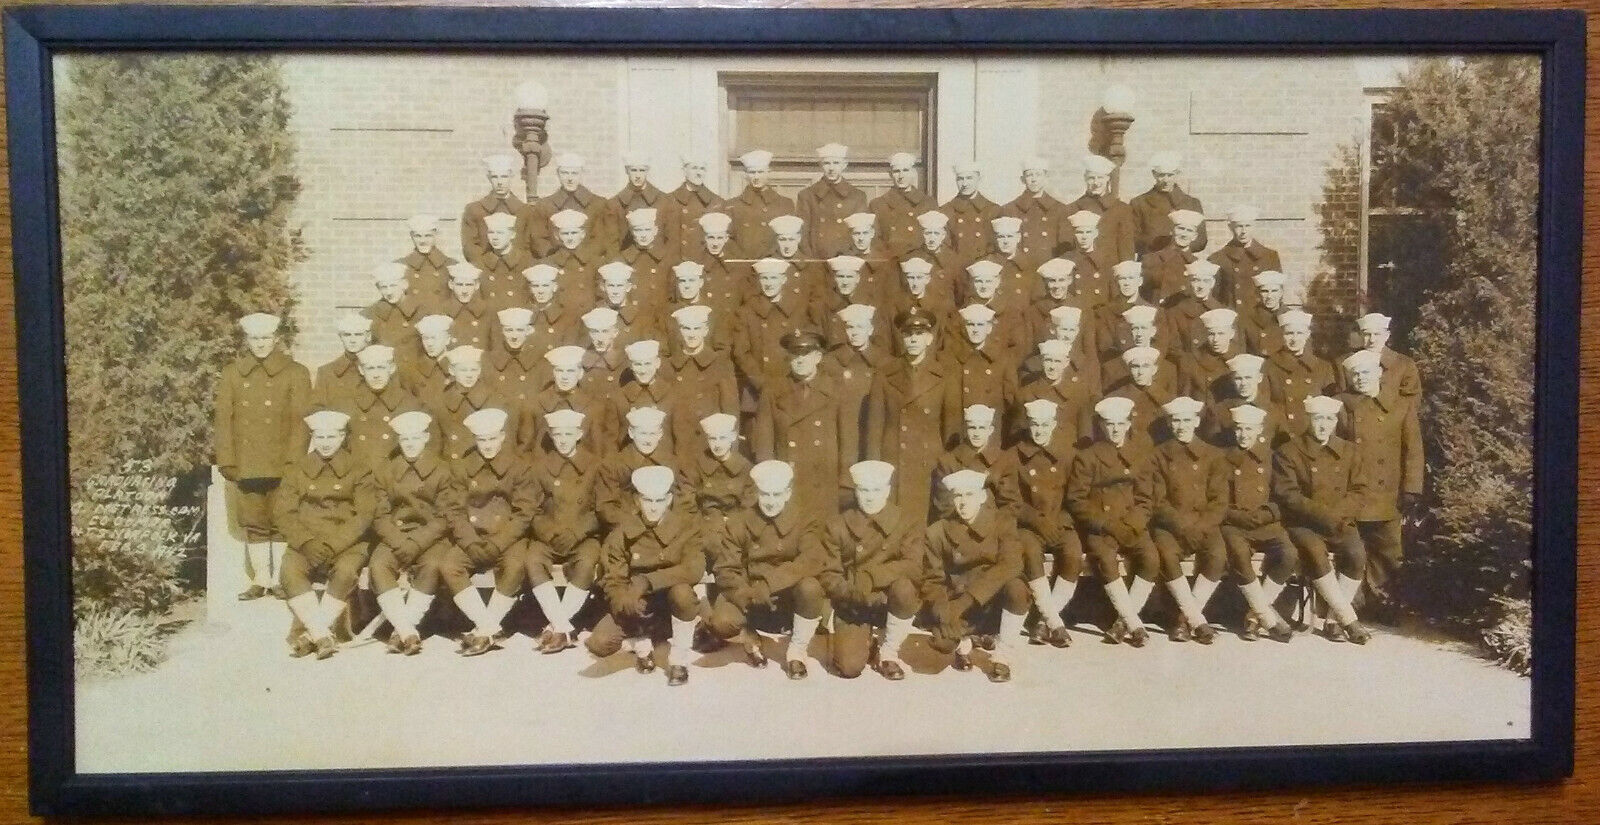 1942 Naval Training Center Graduating Class Photograph - Norfolk VA 